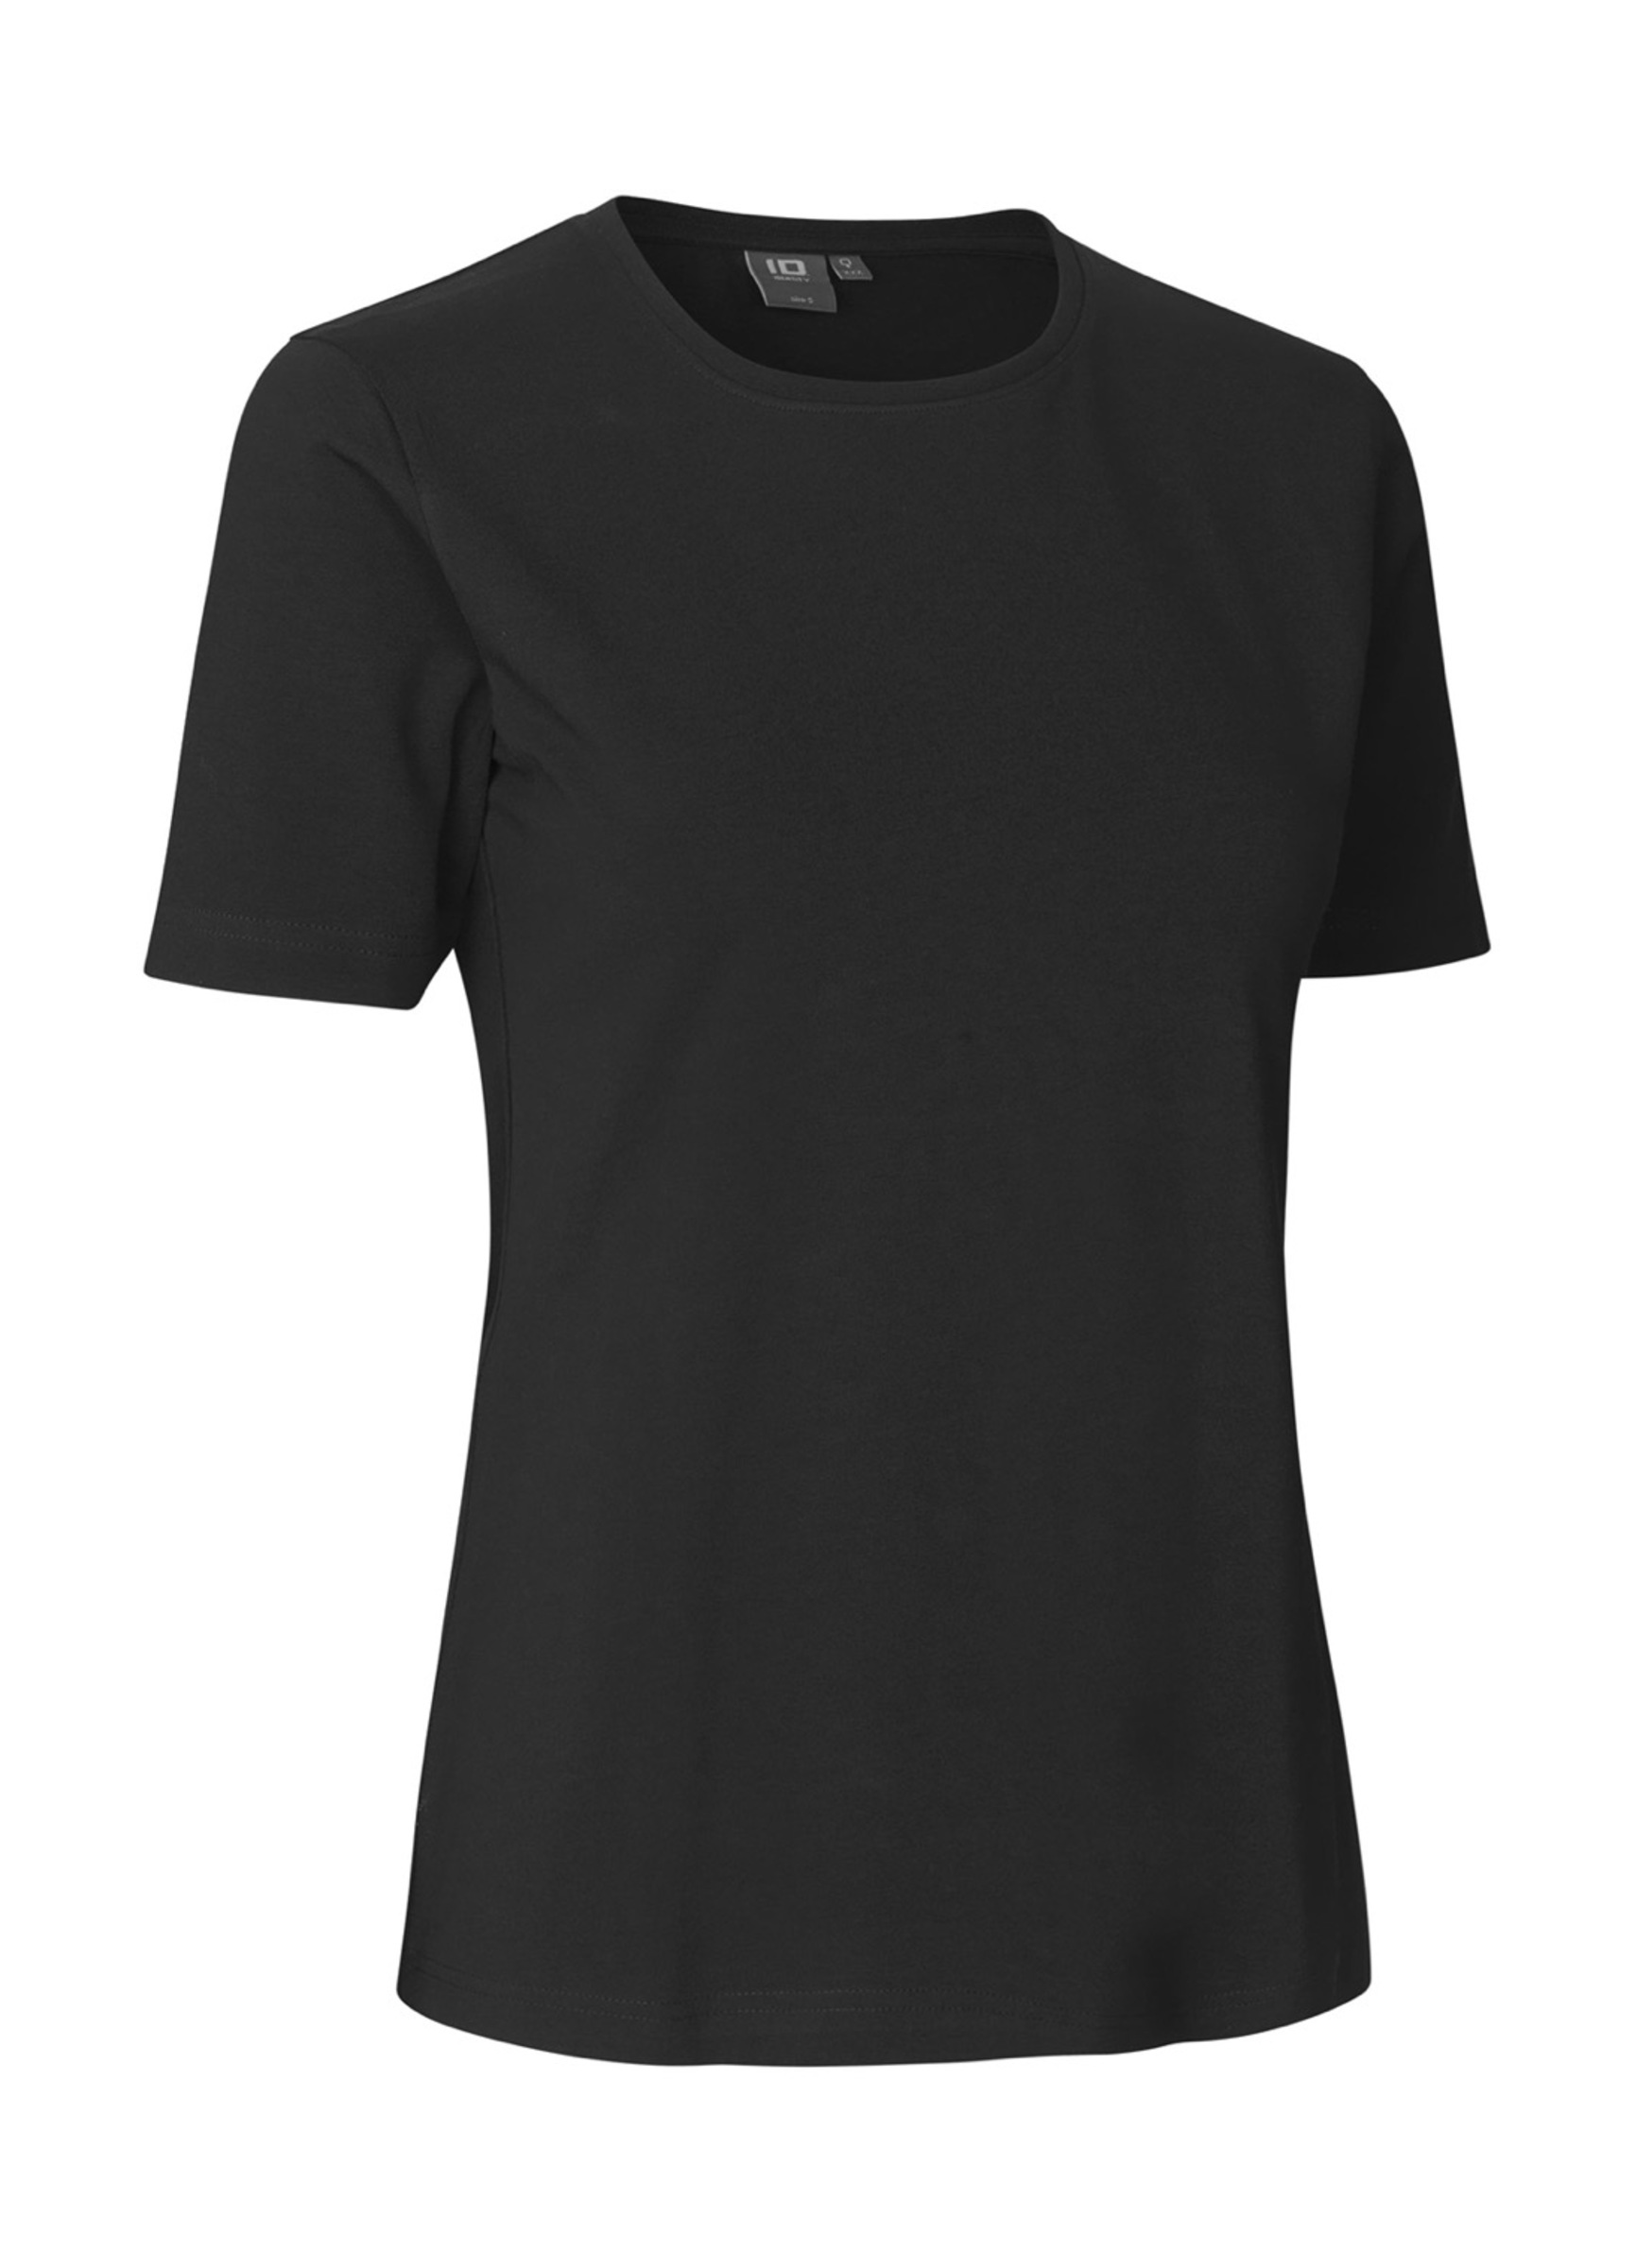 Idwear Stretch T-shirt